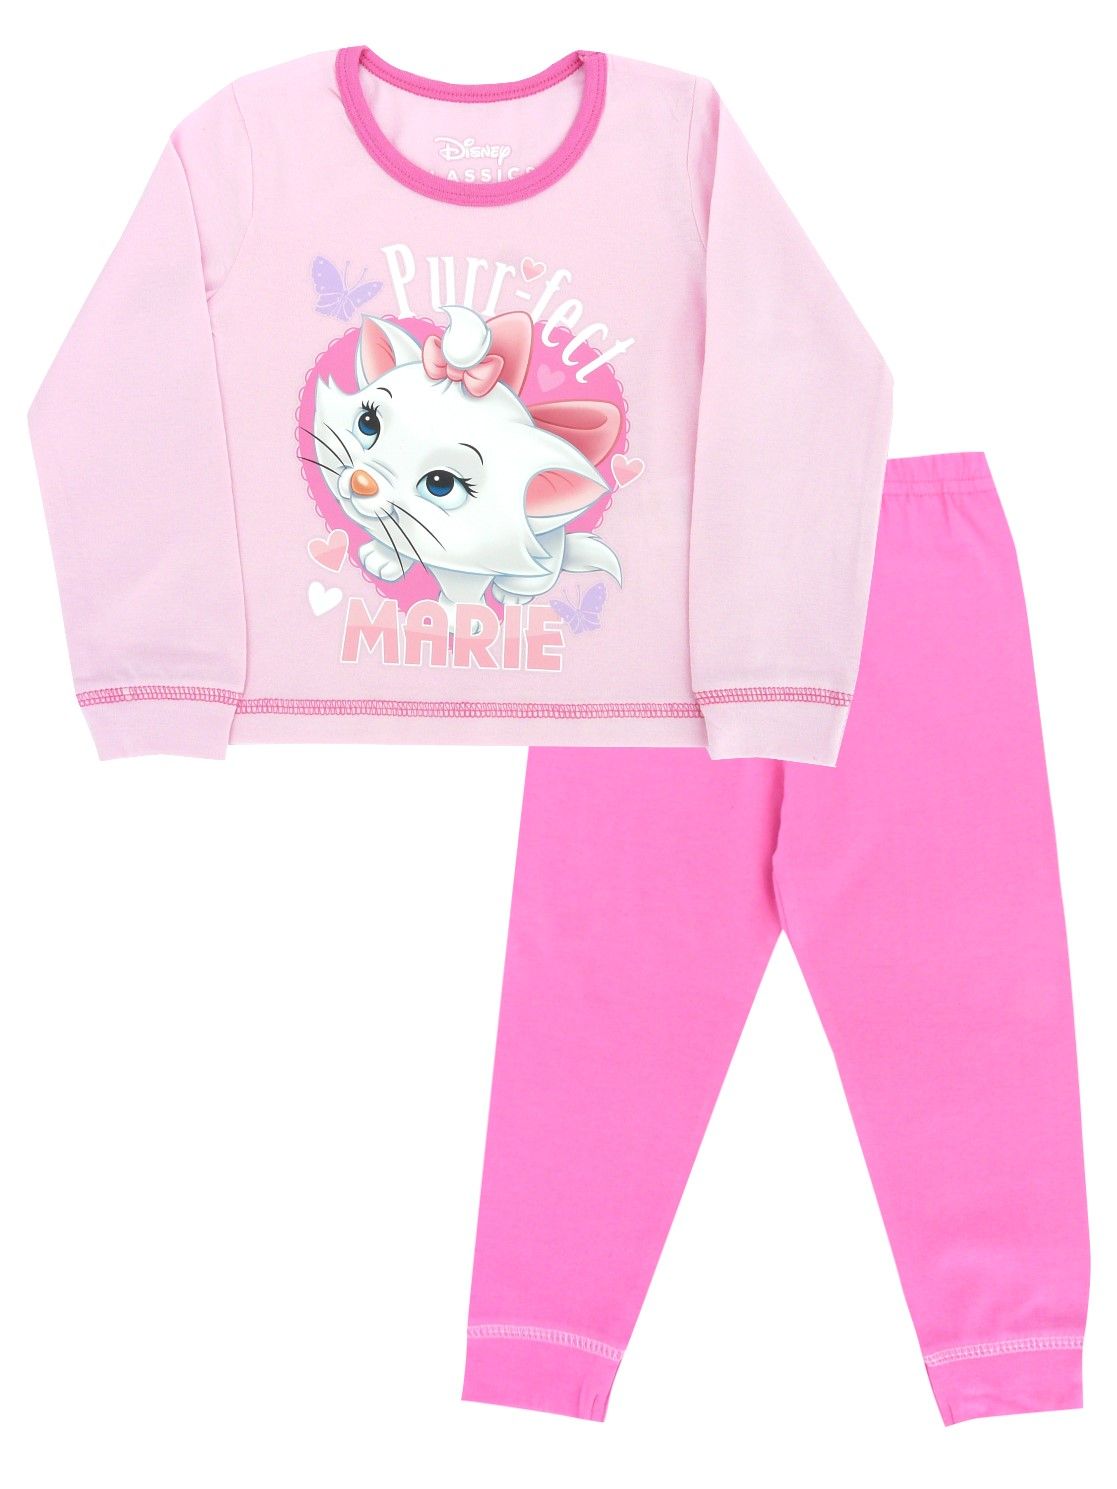 Disney Aristocats "Purr-fect" Girls Pyjamas